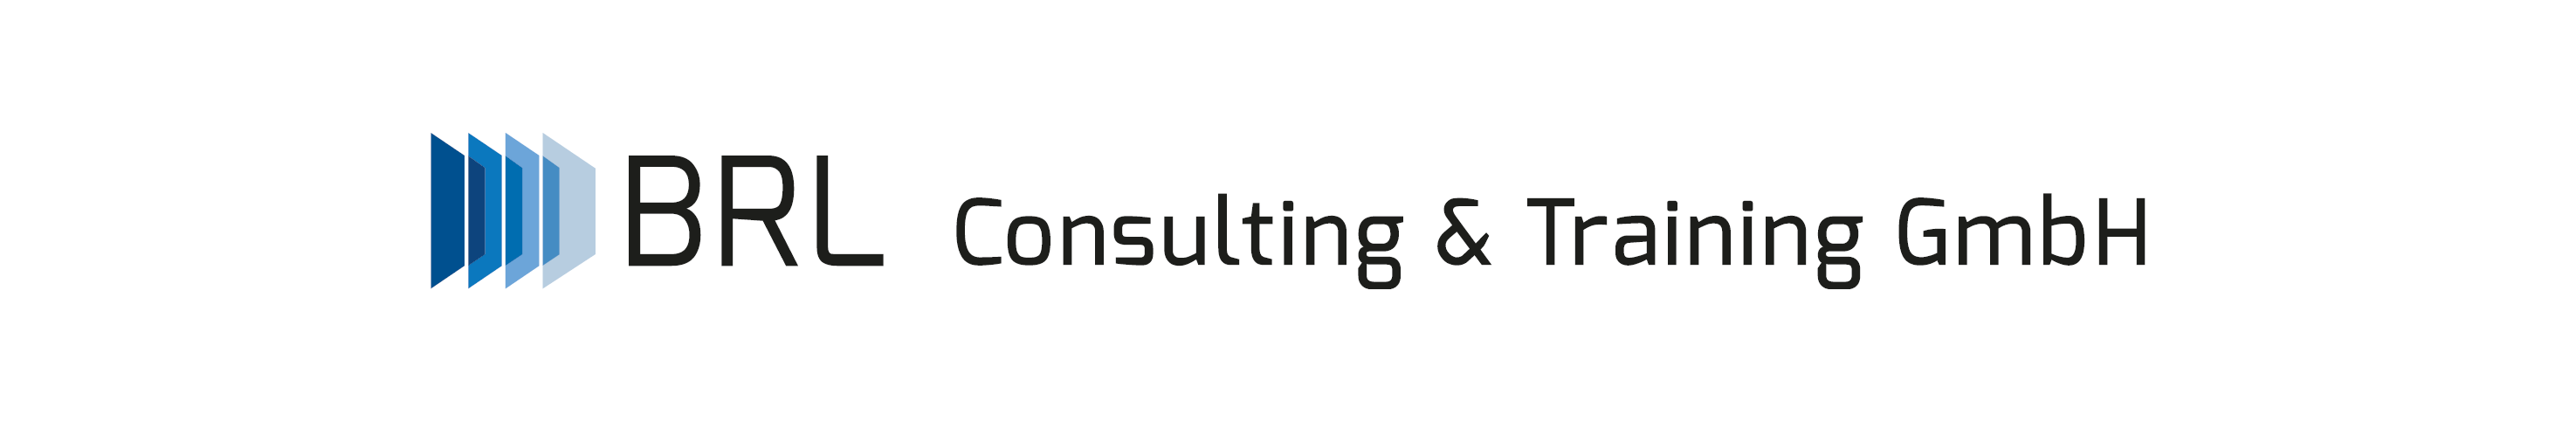 BRL Consulting & Training GmbH Logo